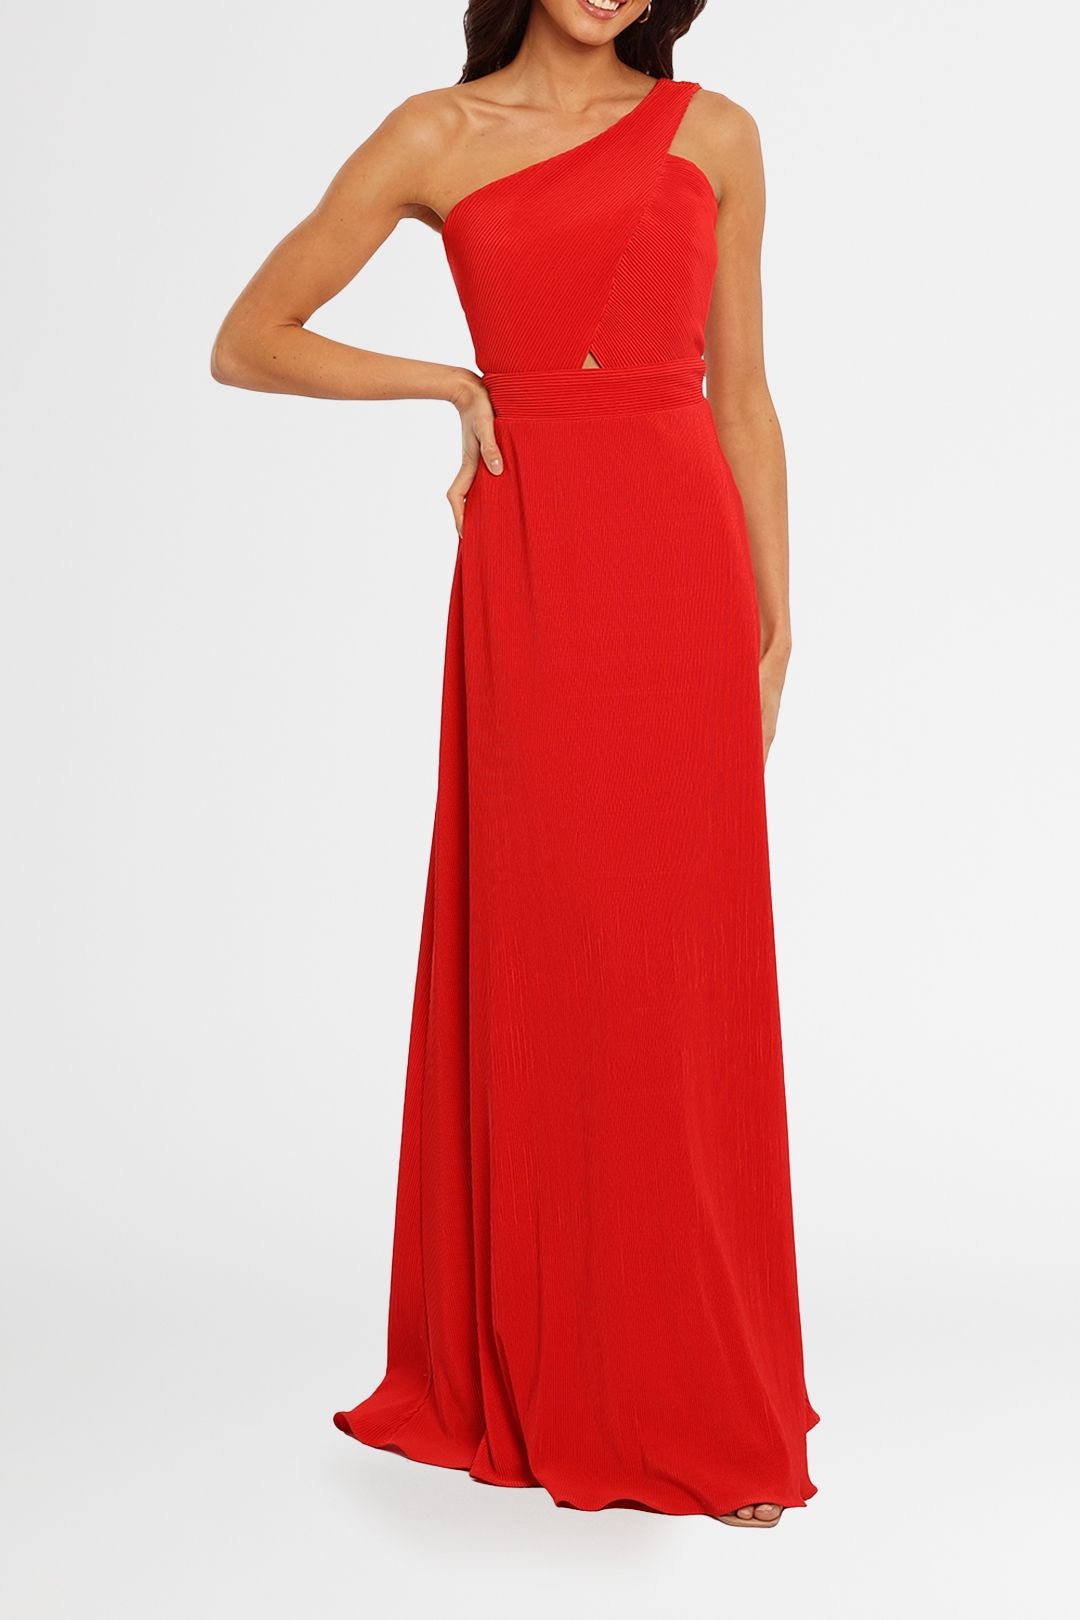 Dior Gown Red Langhem cutout